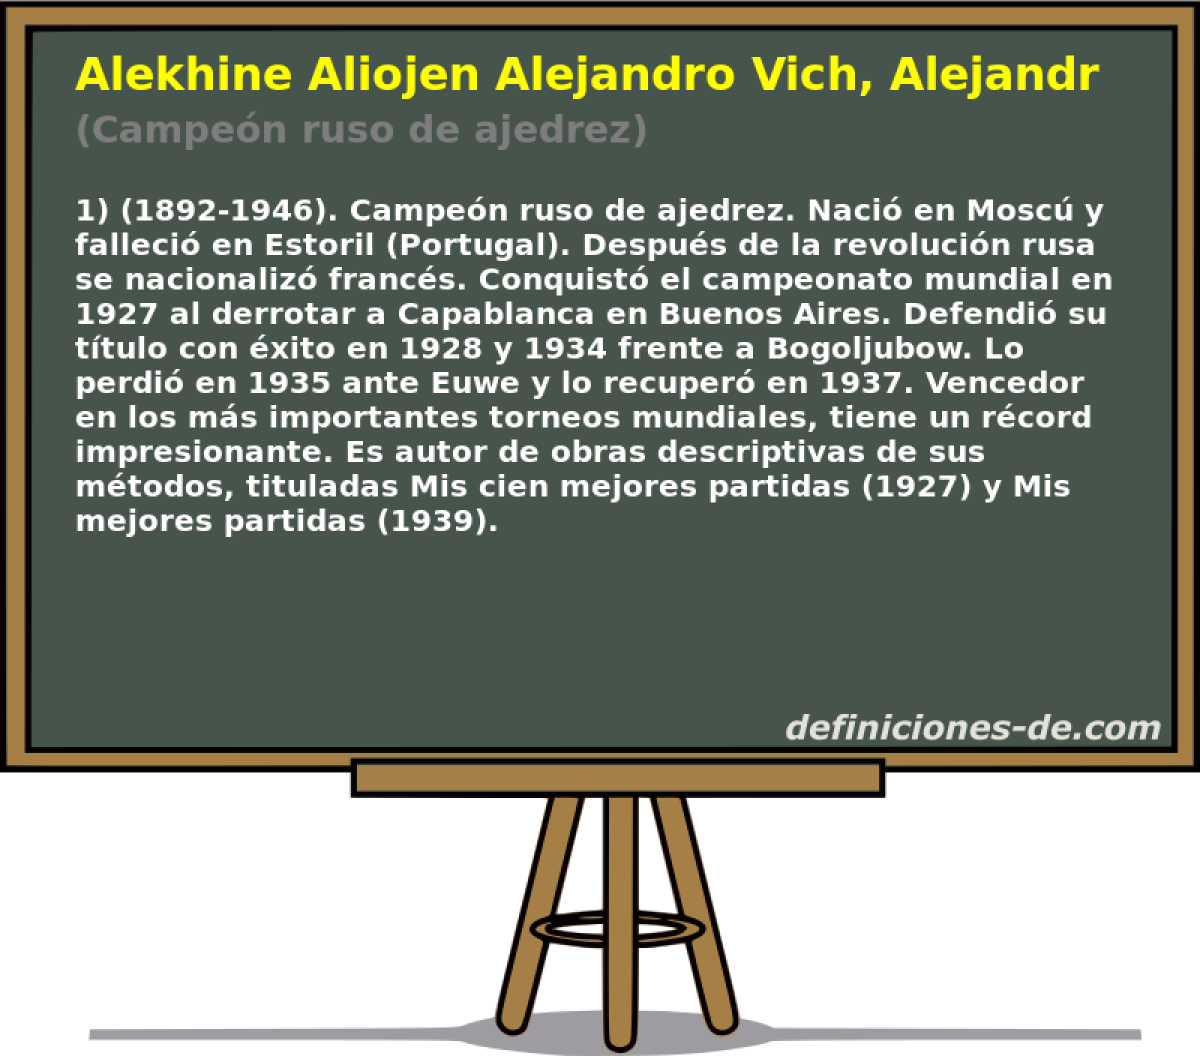 Alekhine Aliojen Alejandro Vich, Alejandro (Campen ruso de ajedrez)